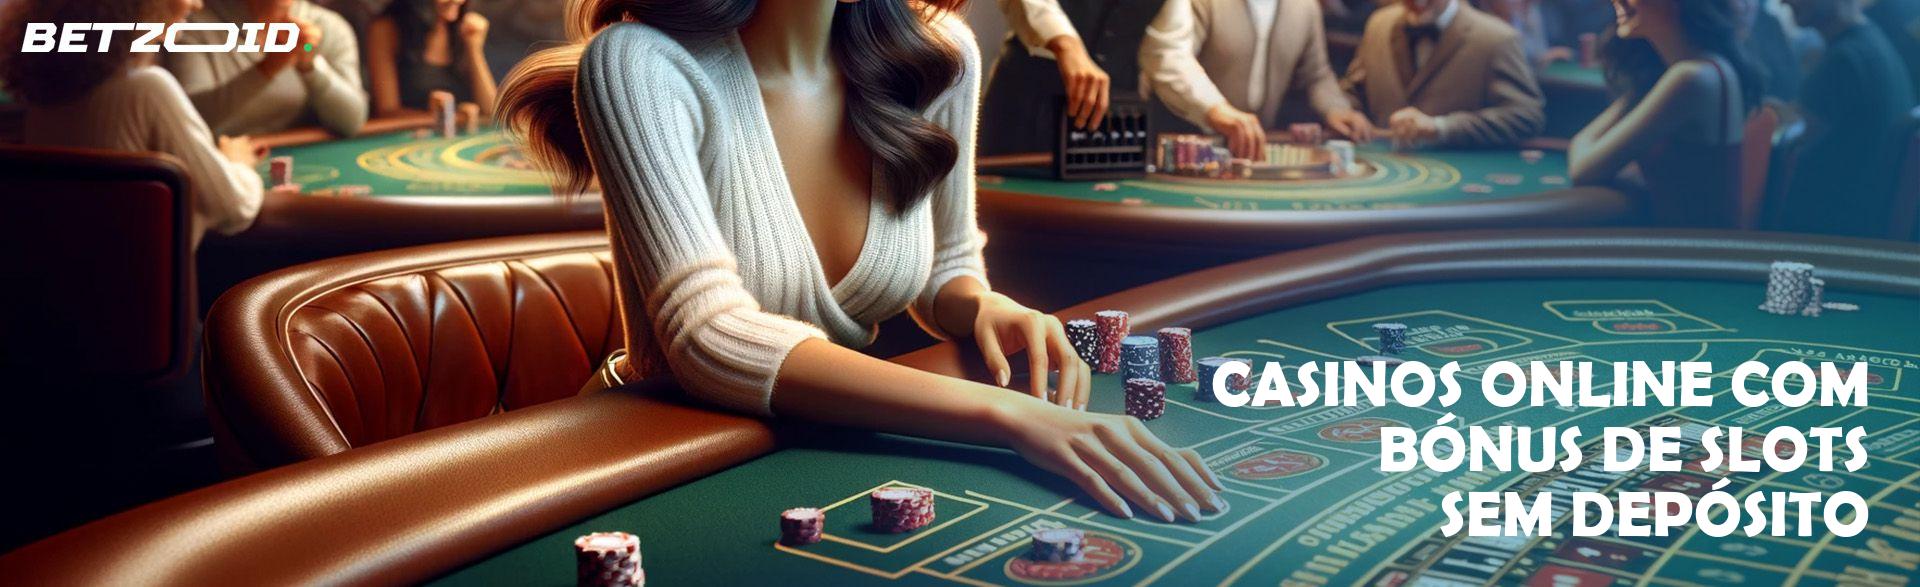 Casinos Online com Bónus de Slots sem Depósito.